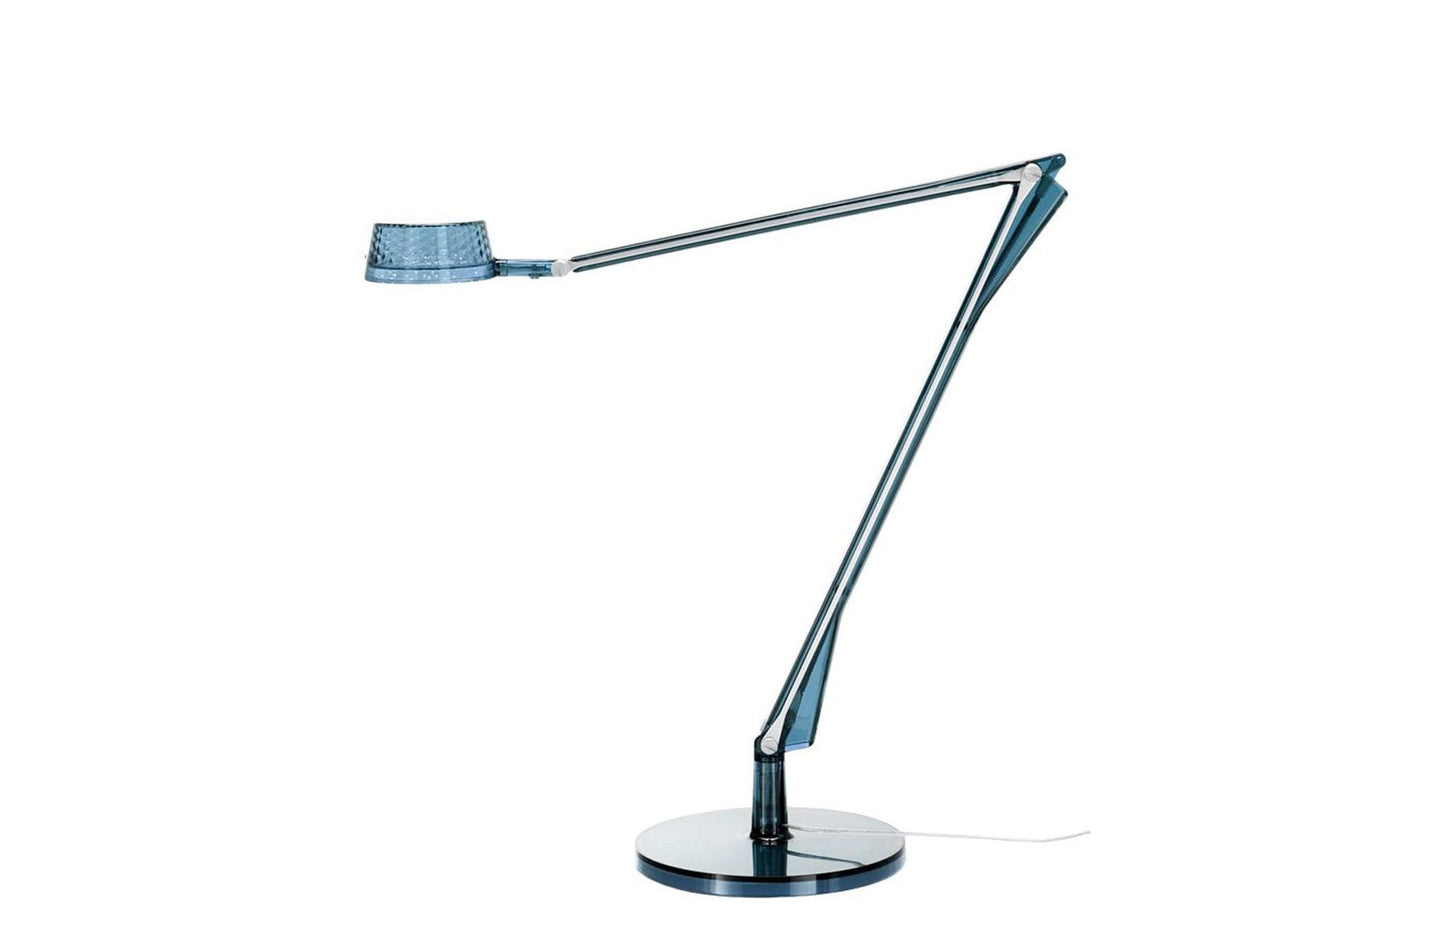 Aledin Dec Desk Lamp
